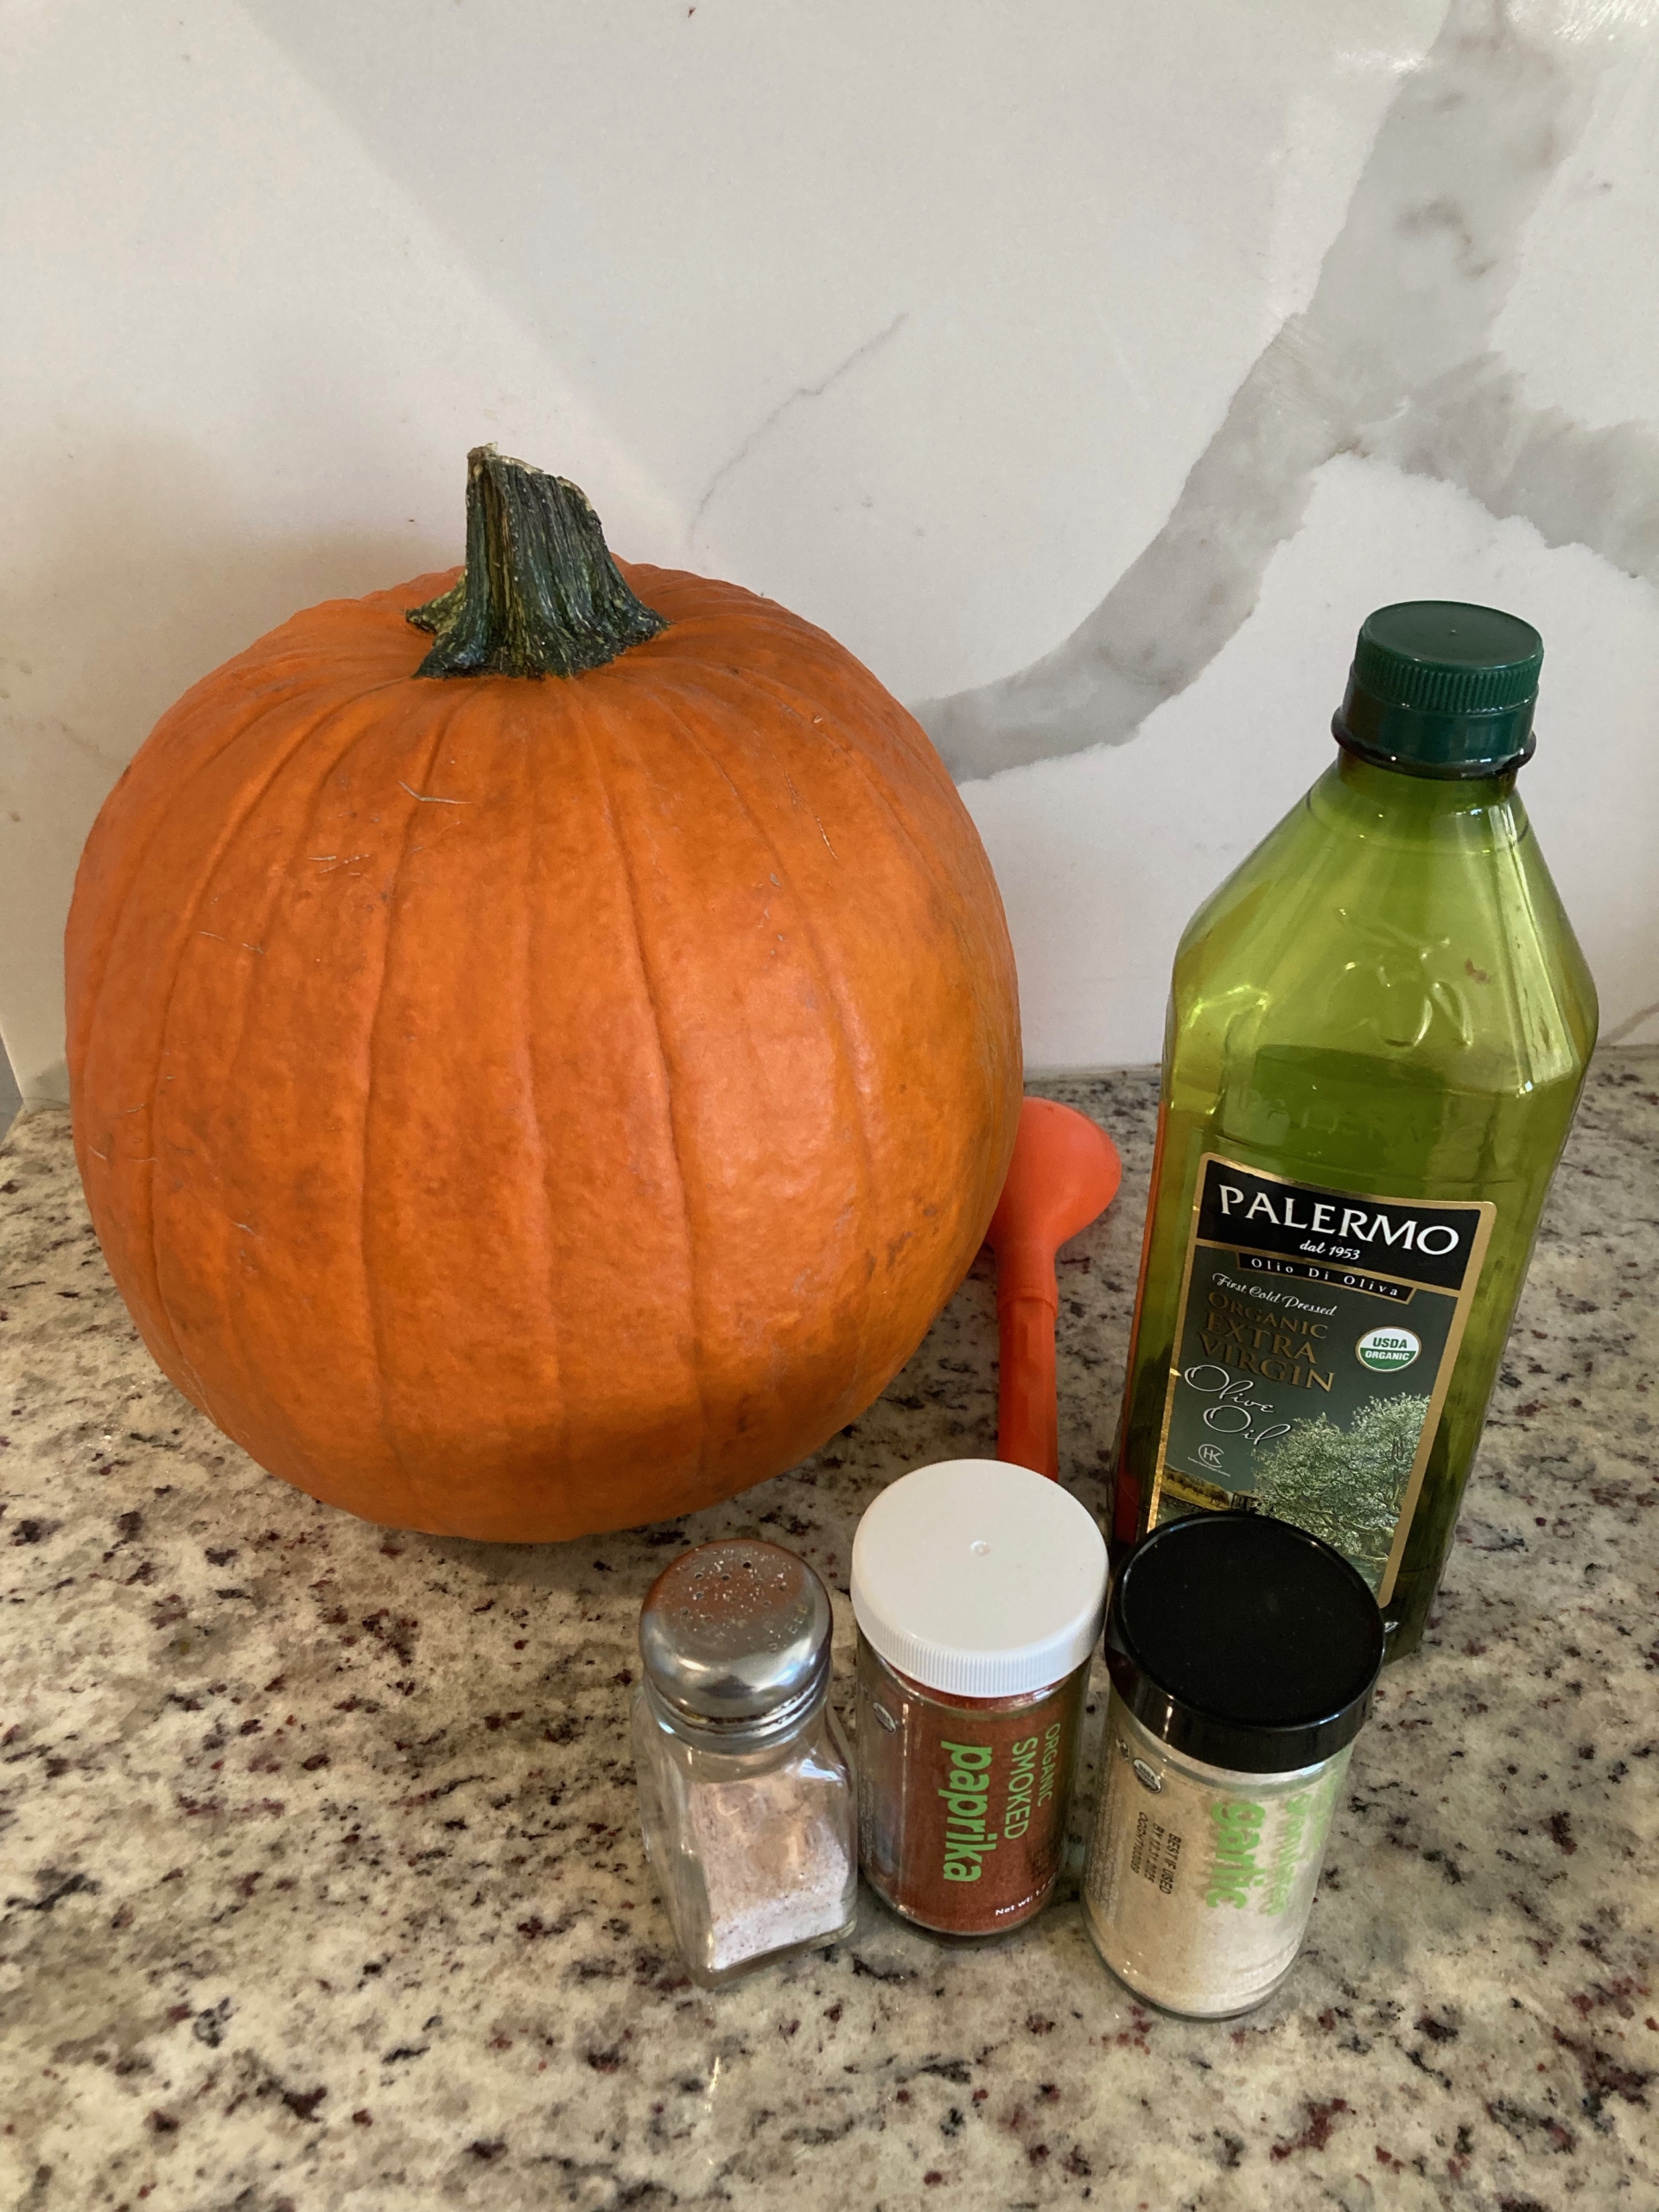 Pumpkin, oil, paprika, garlic, and salt to make Roasted Pumpkin Seeds